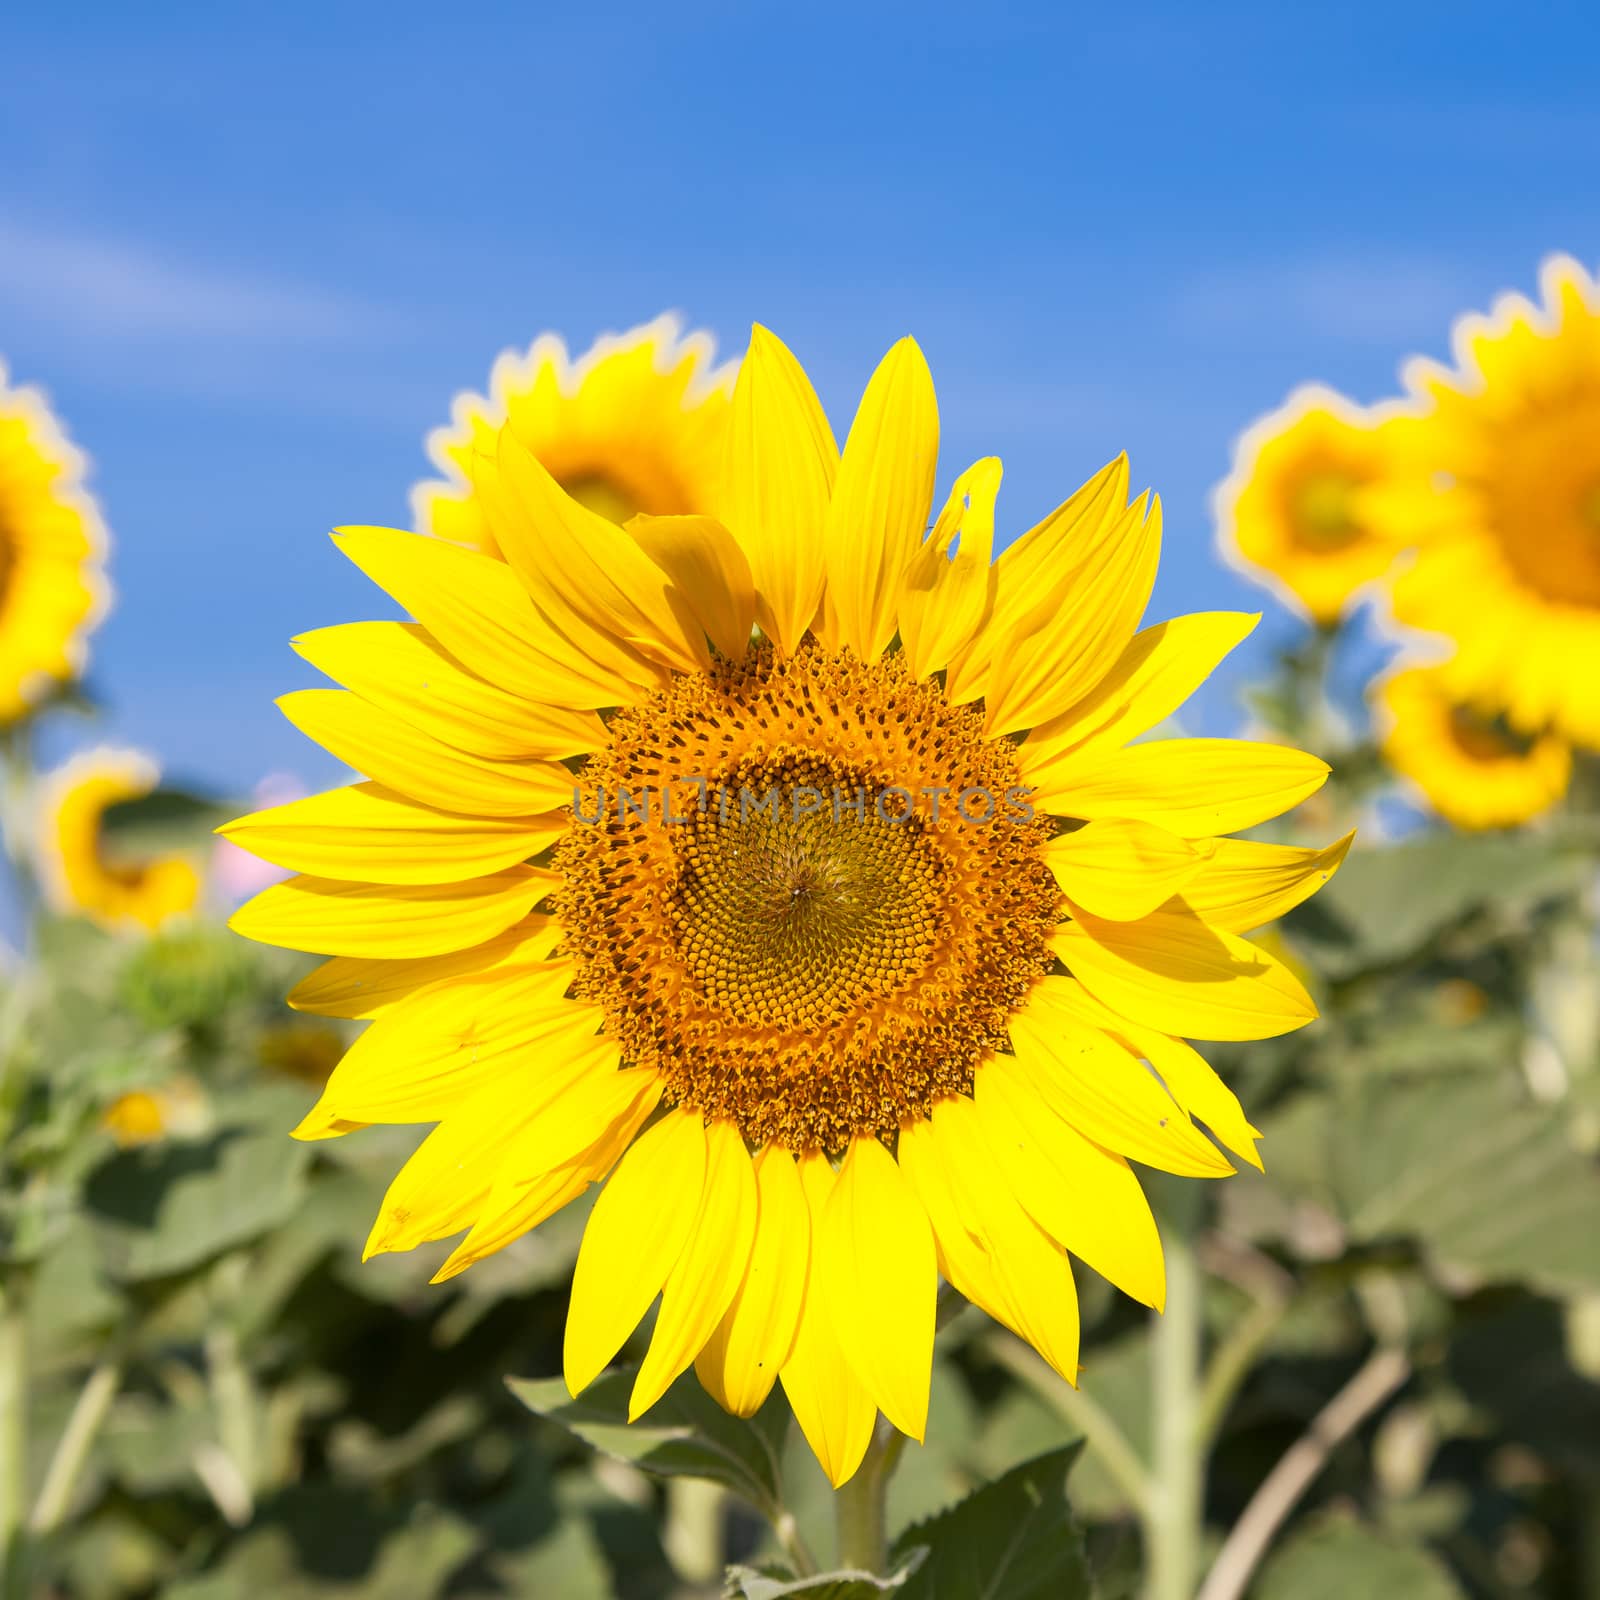 Sunflower in a field by a454